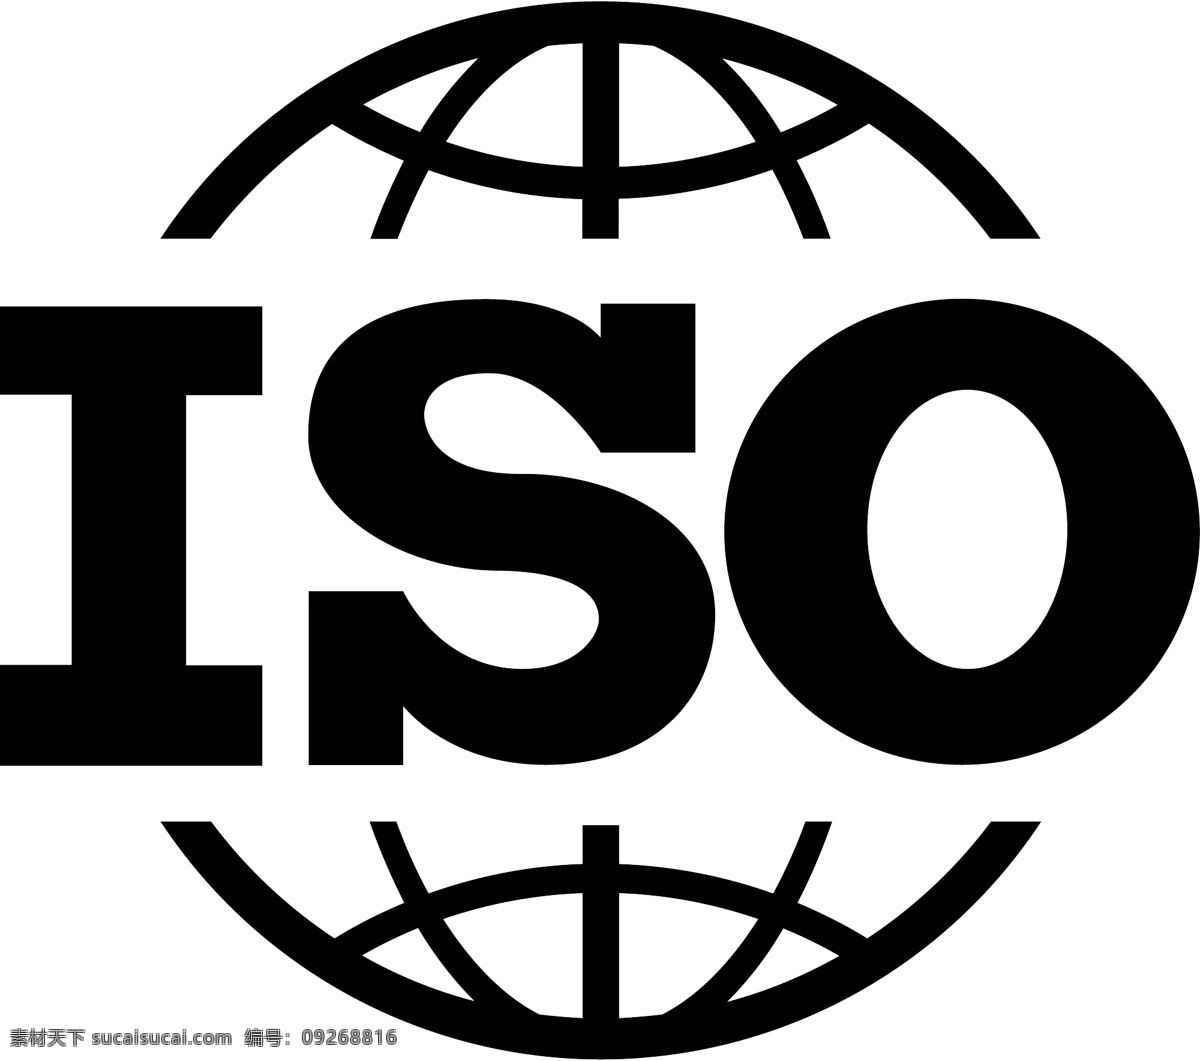 iso 质量认证 矢量图 质检证书 矢量图标 质检 证书 标志图标 公共标识标志